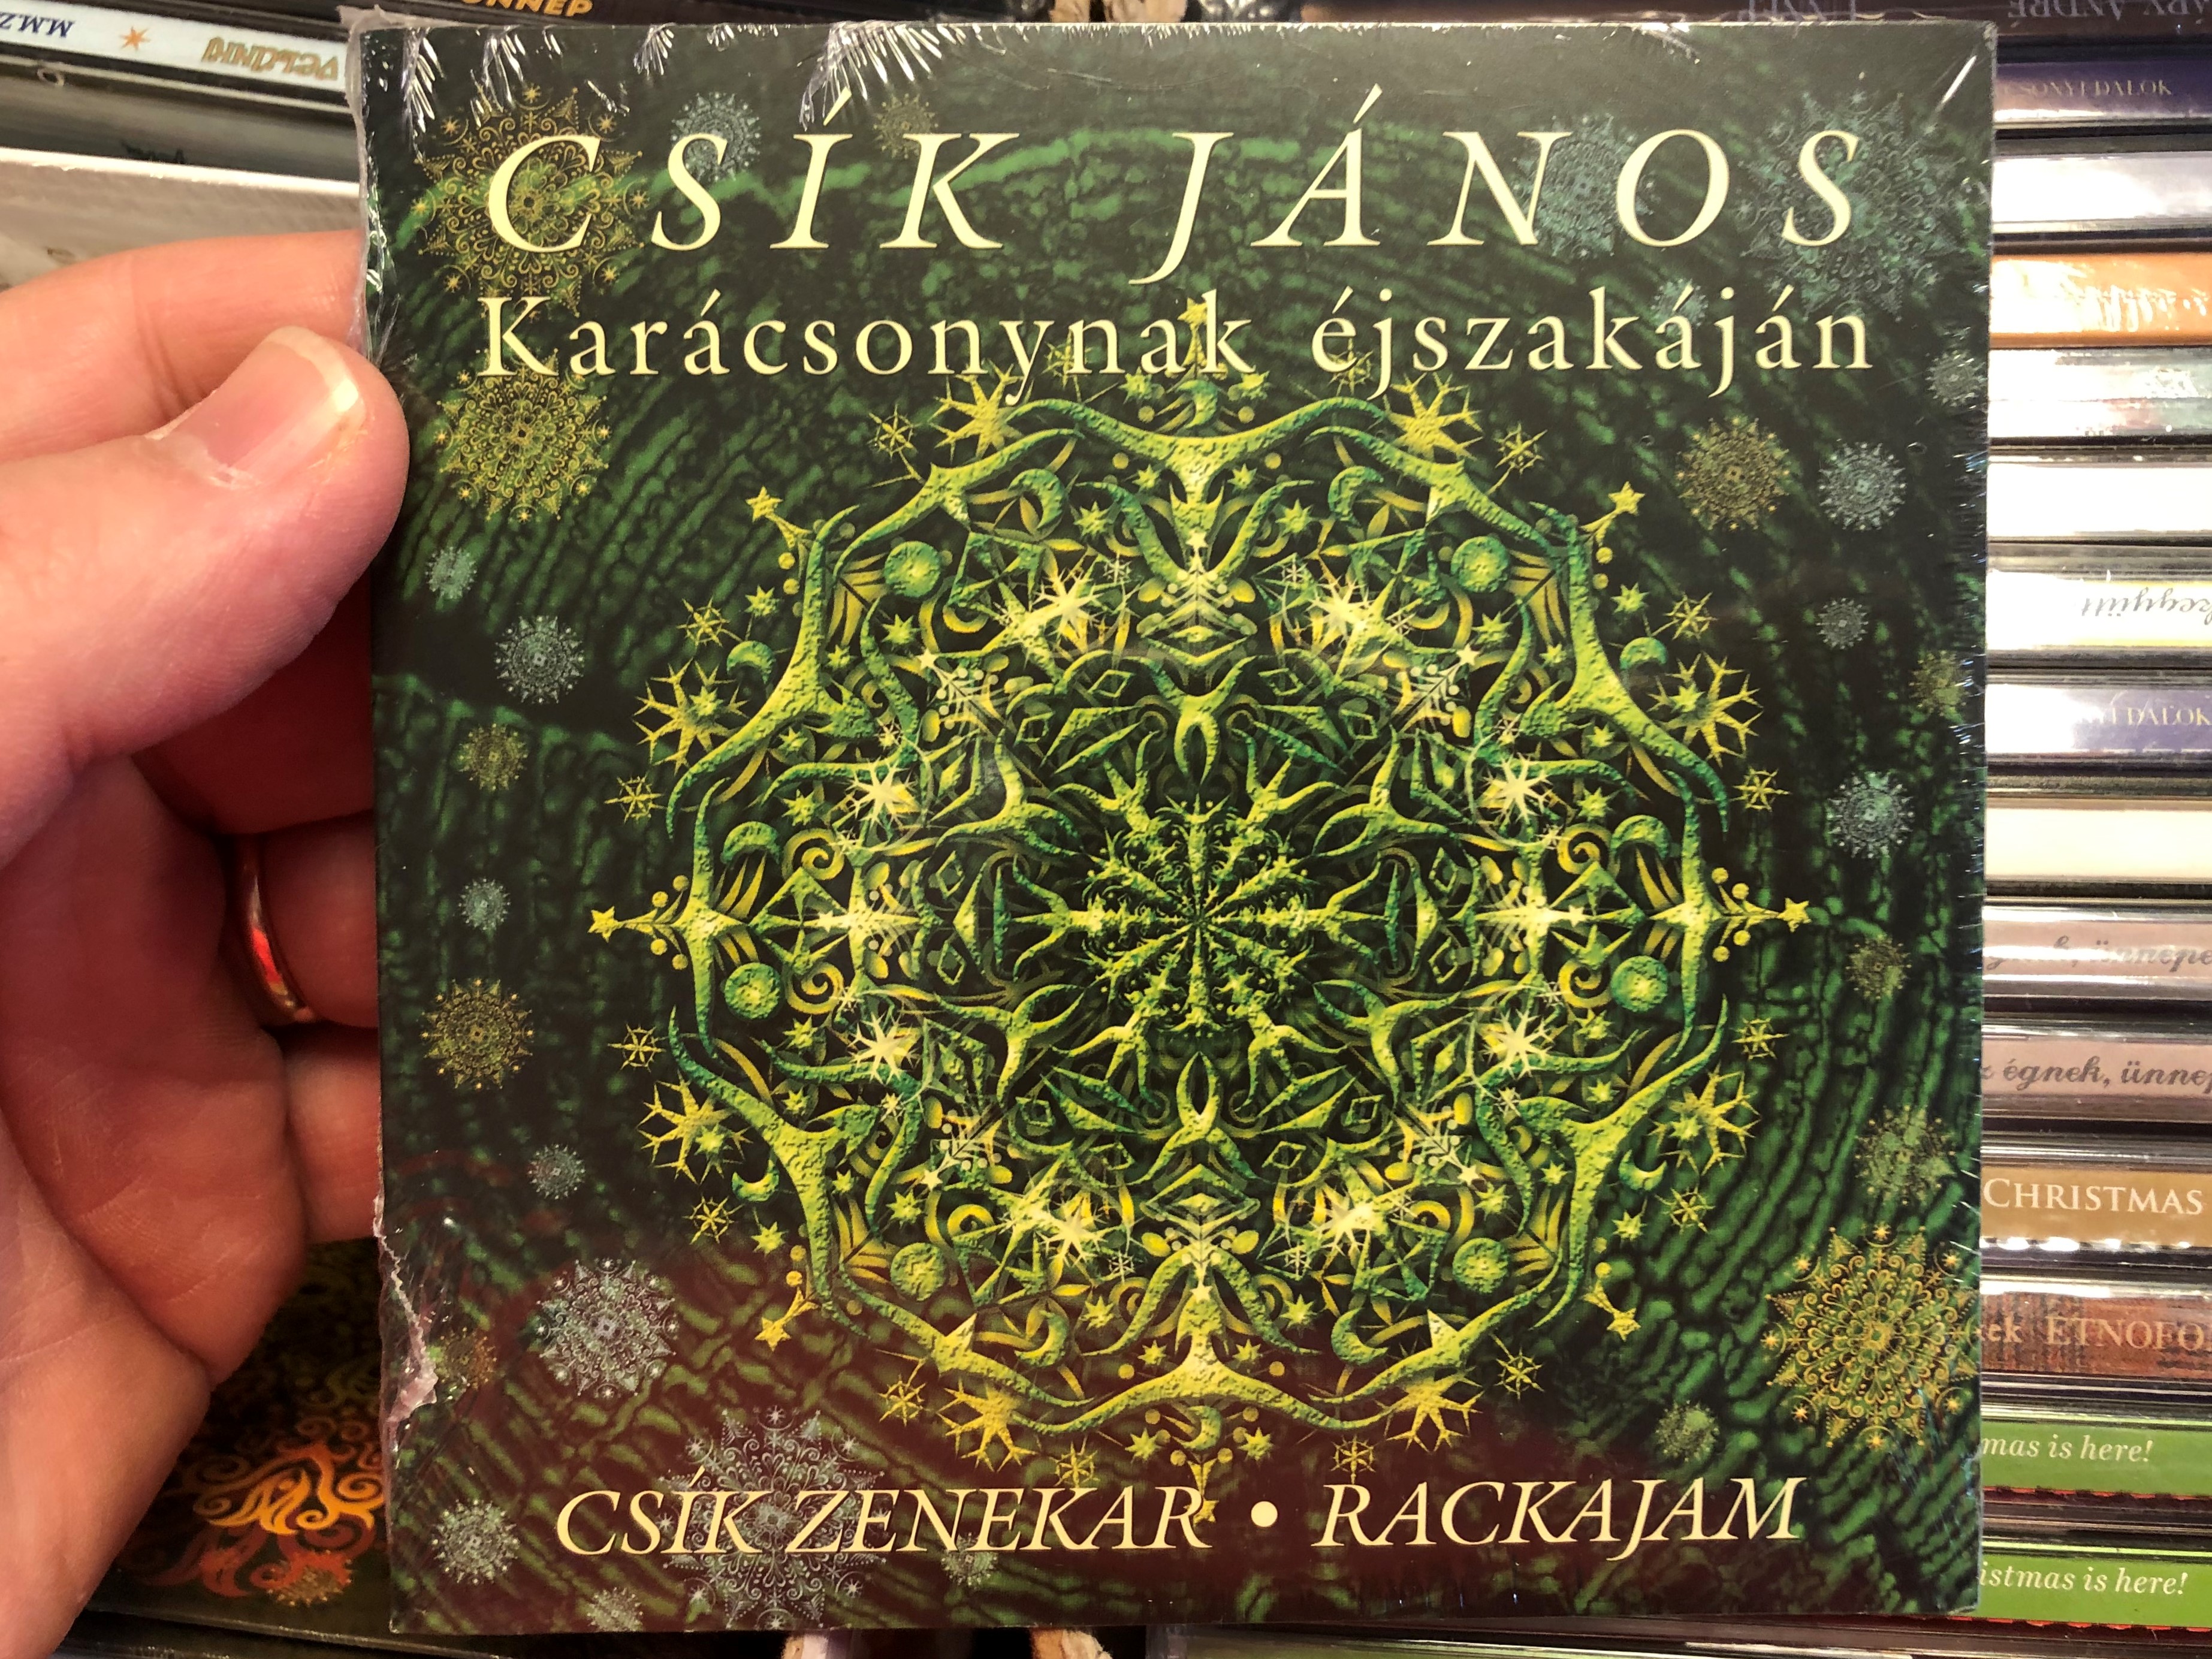 cs-k-j-nos-kar-csonynak-jszak-j-n-cs-k-zenekar-rackajam-gryllus-audio-cd-gcd-078-1-.jpg